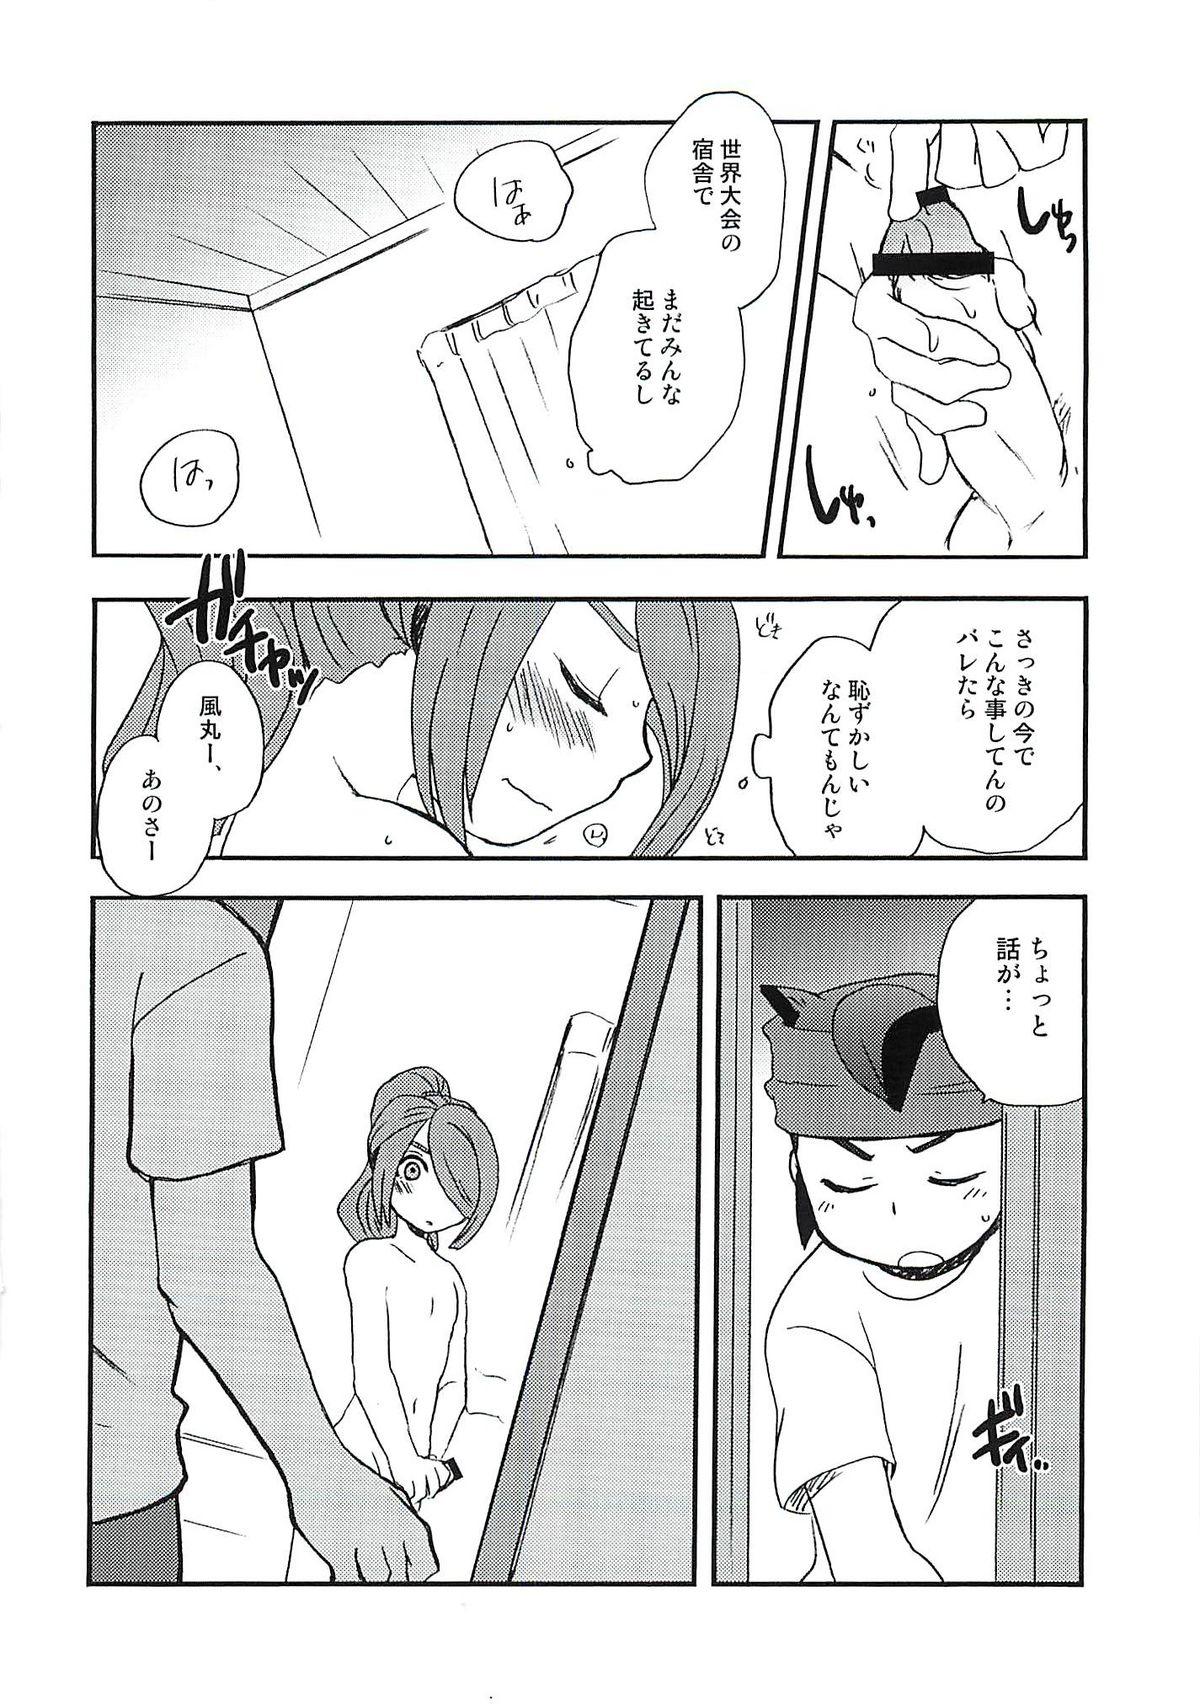 Sucking Dicks 07/21 - Inazuma eleven Cei - Page 11